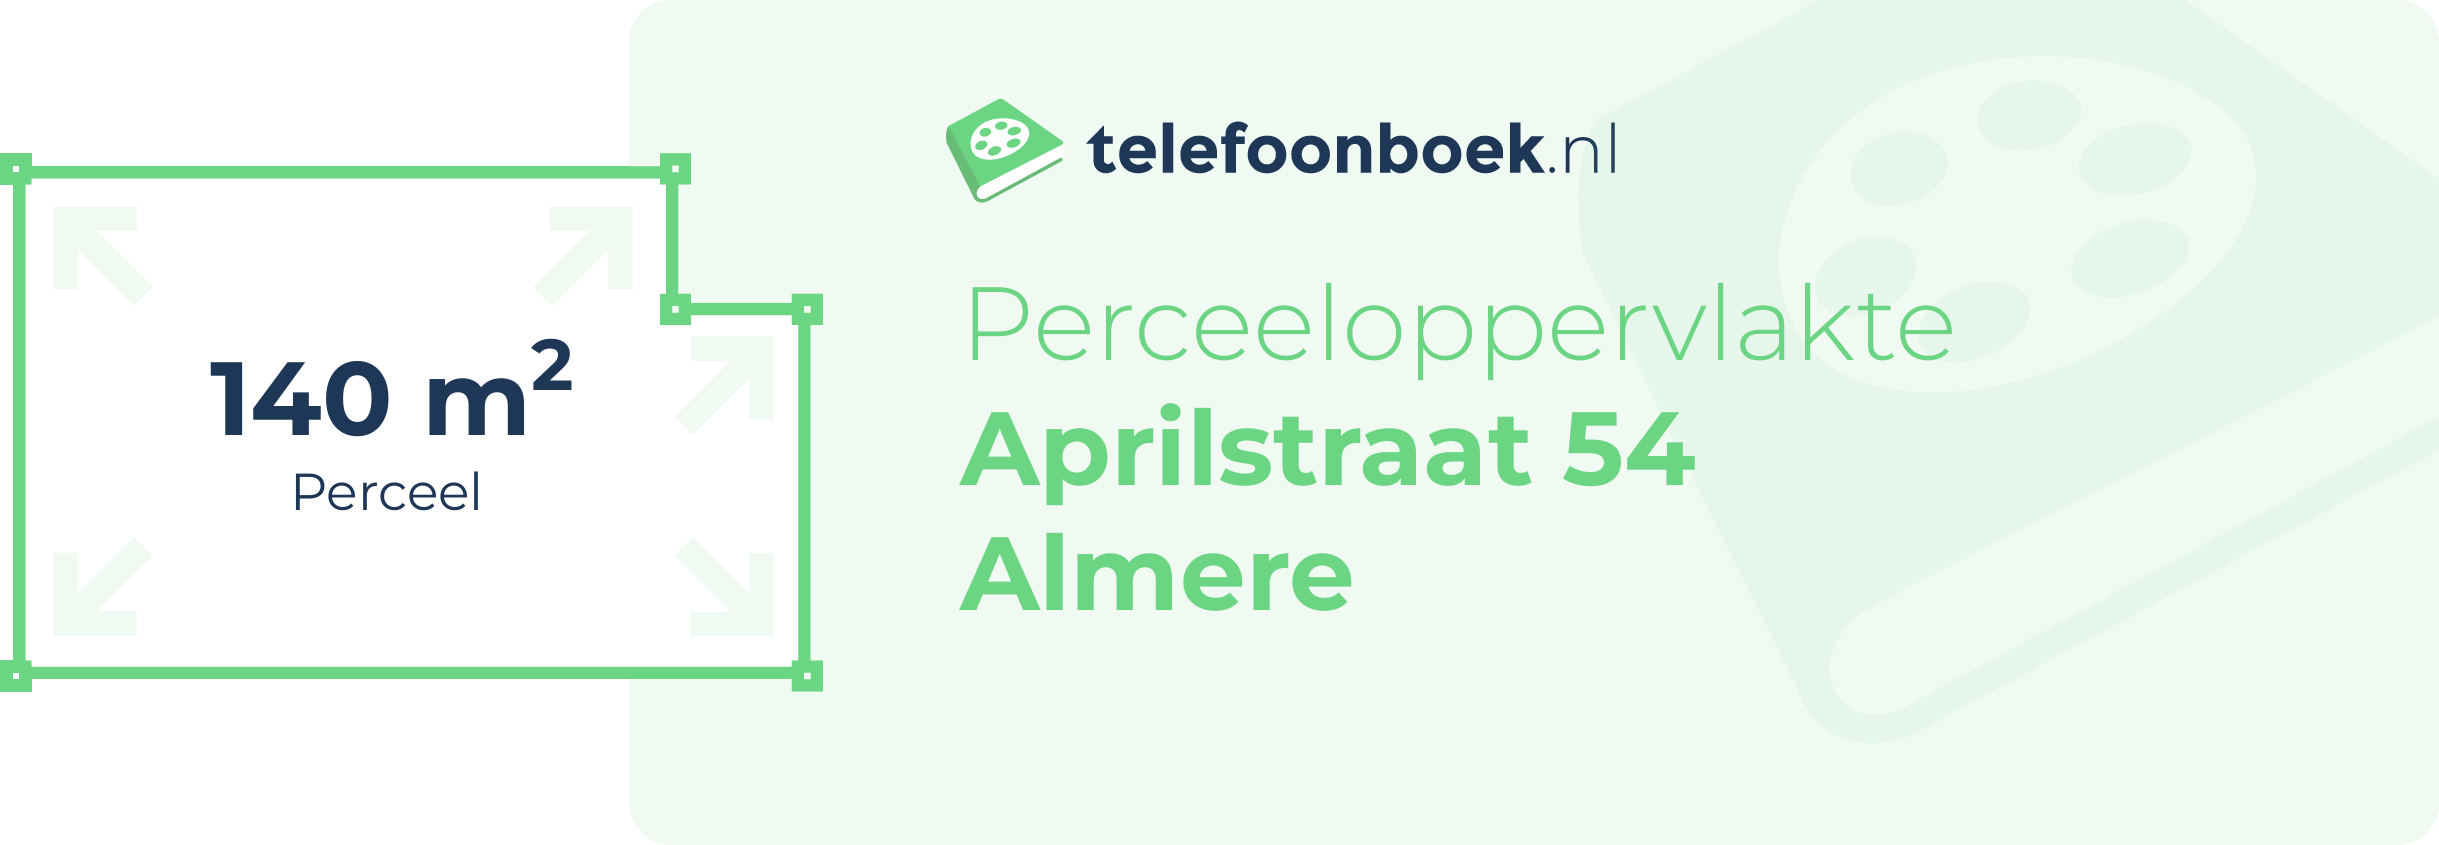 Perceeloppervlakte Aprilstraat 54 Almere